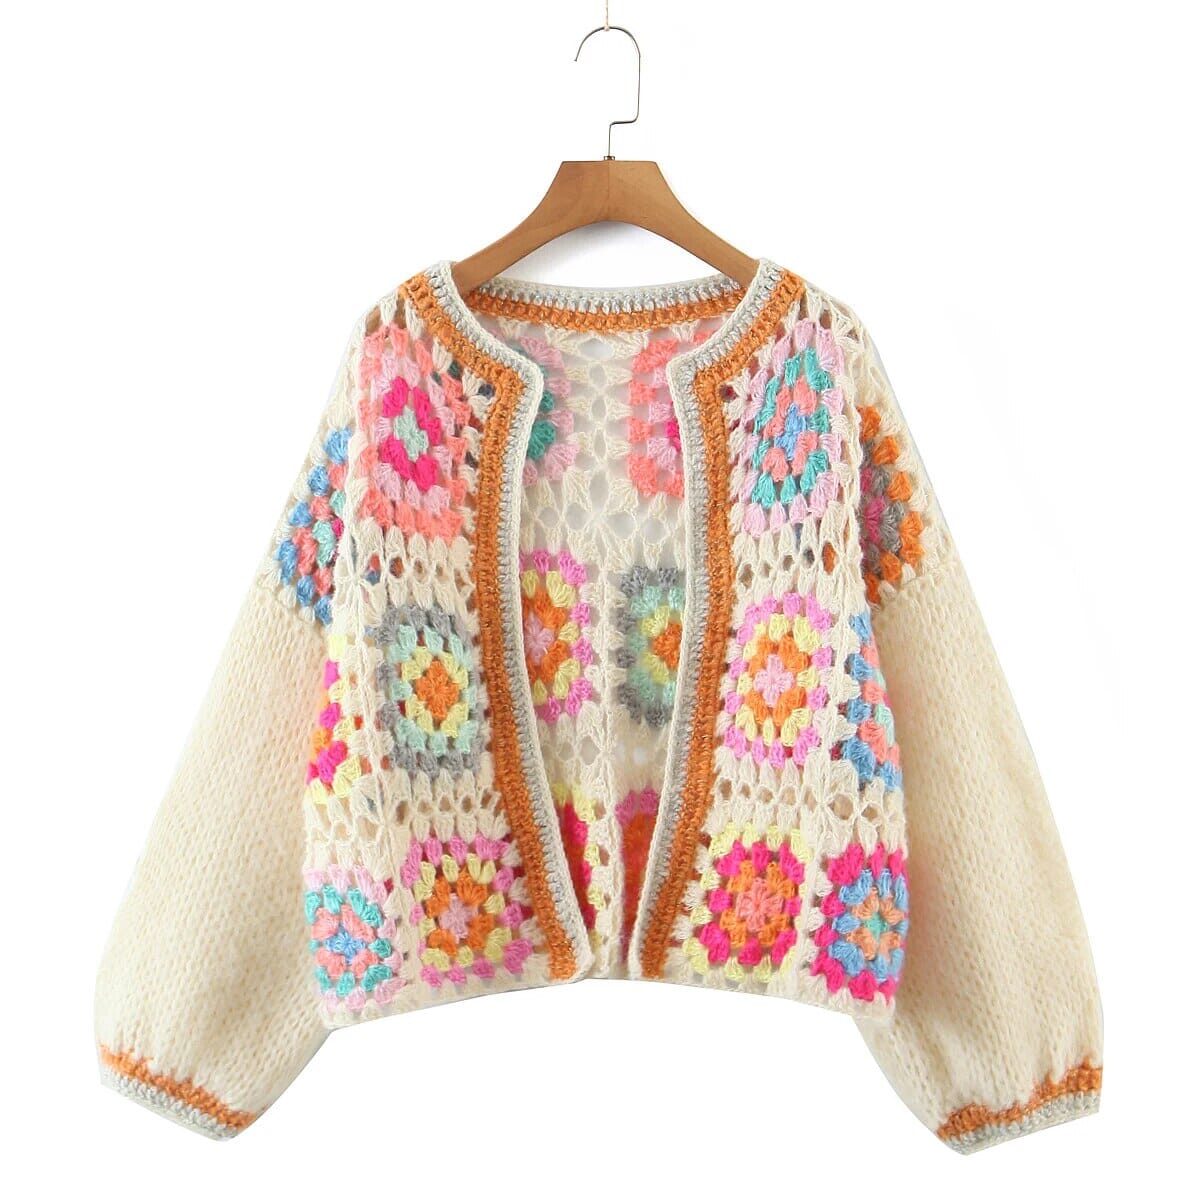 Granny Square Cardigan Crochet Pattern - Originally Lovely